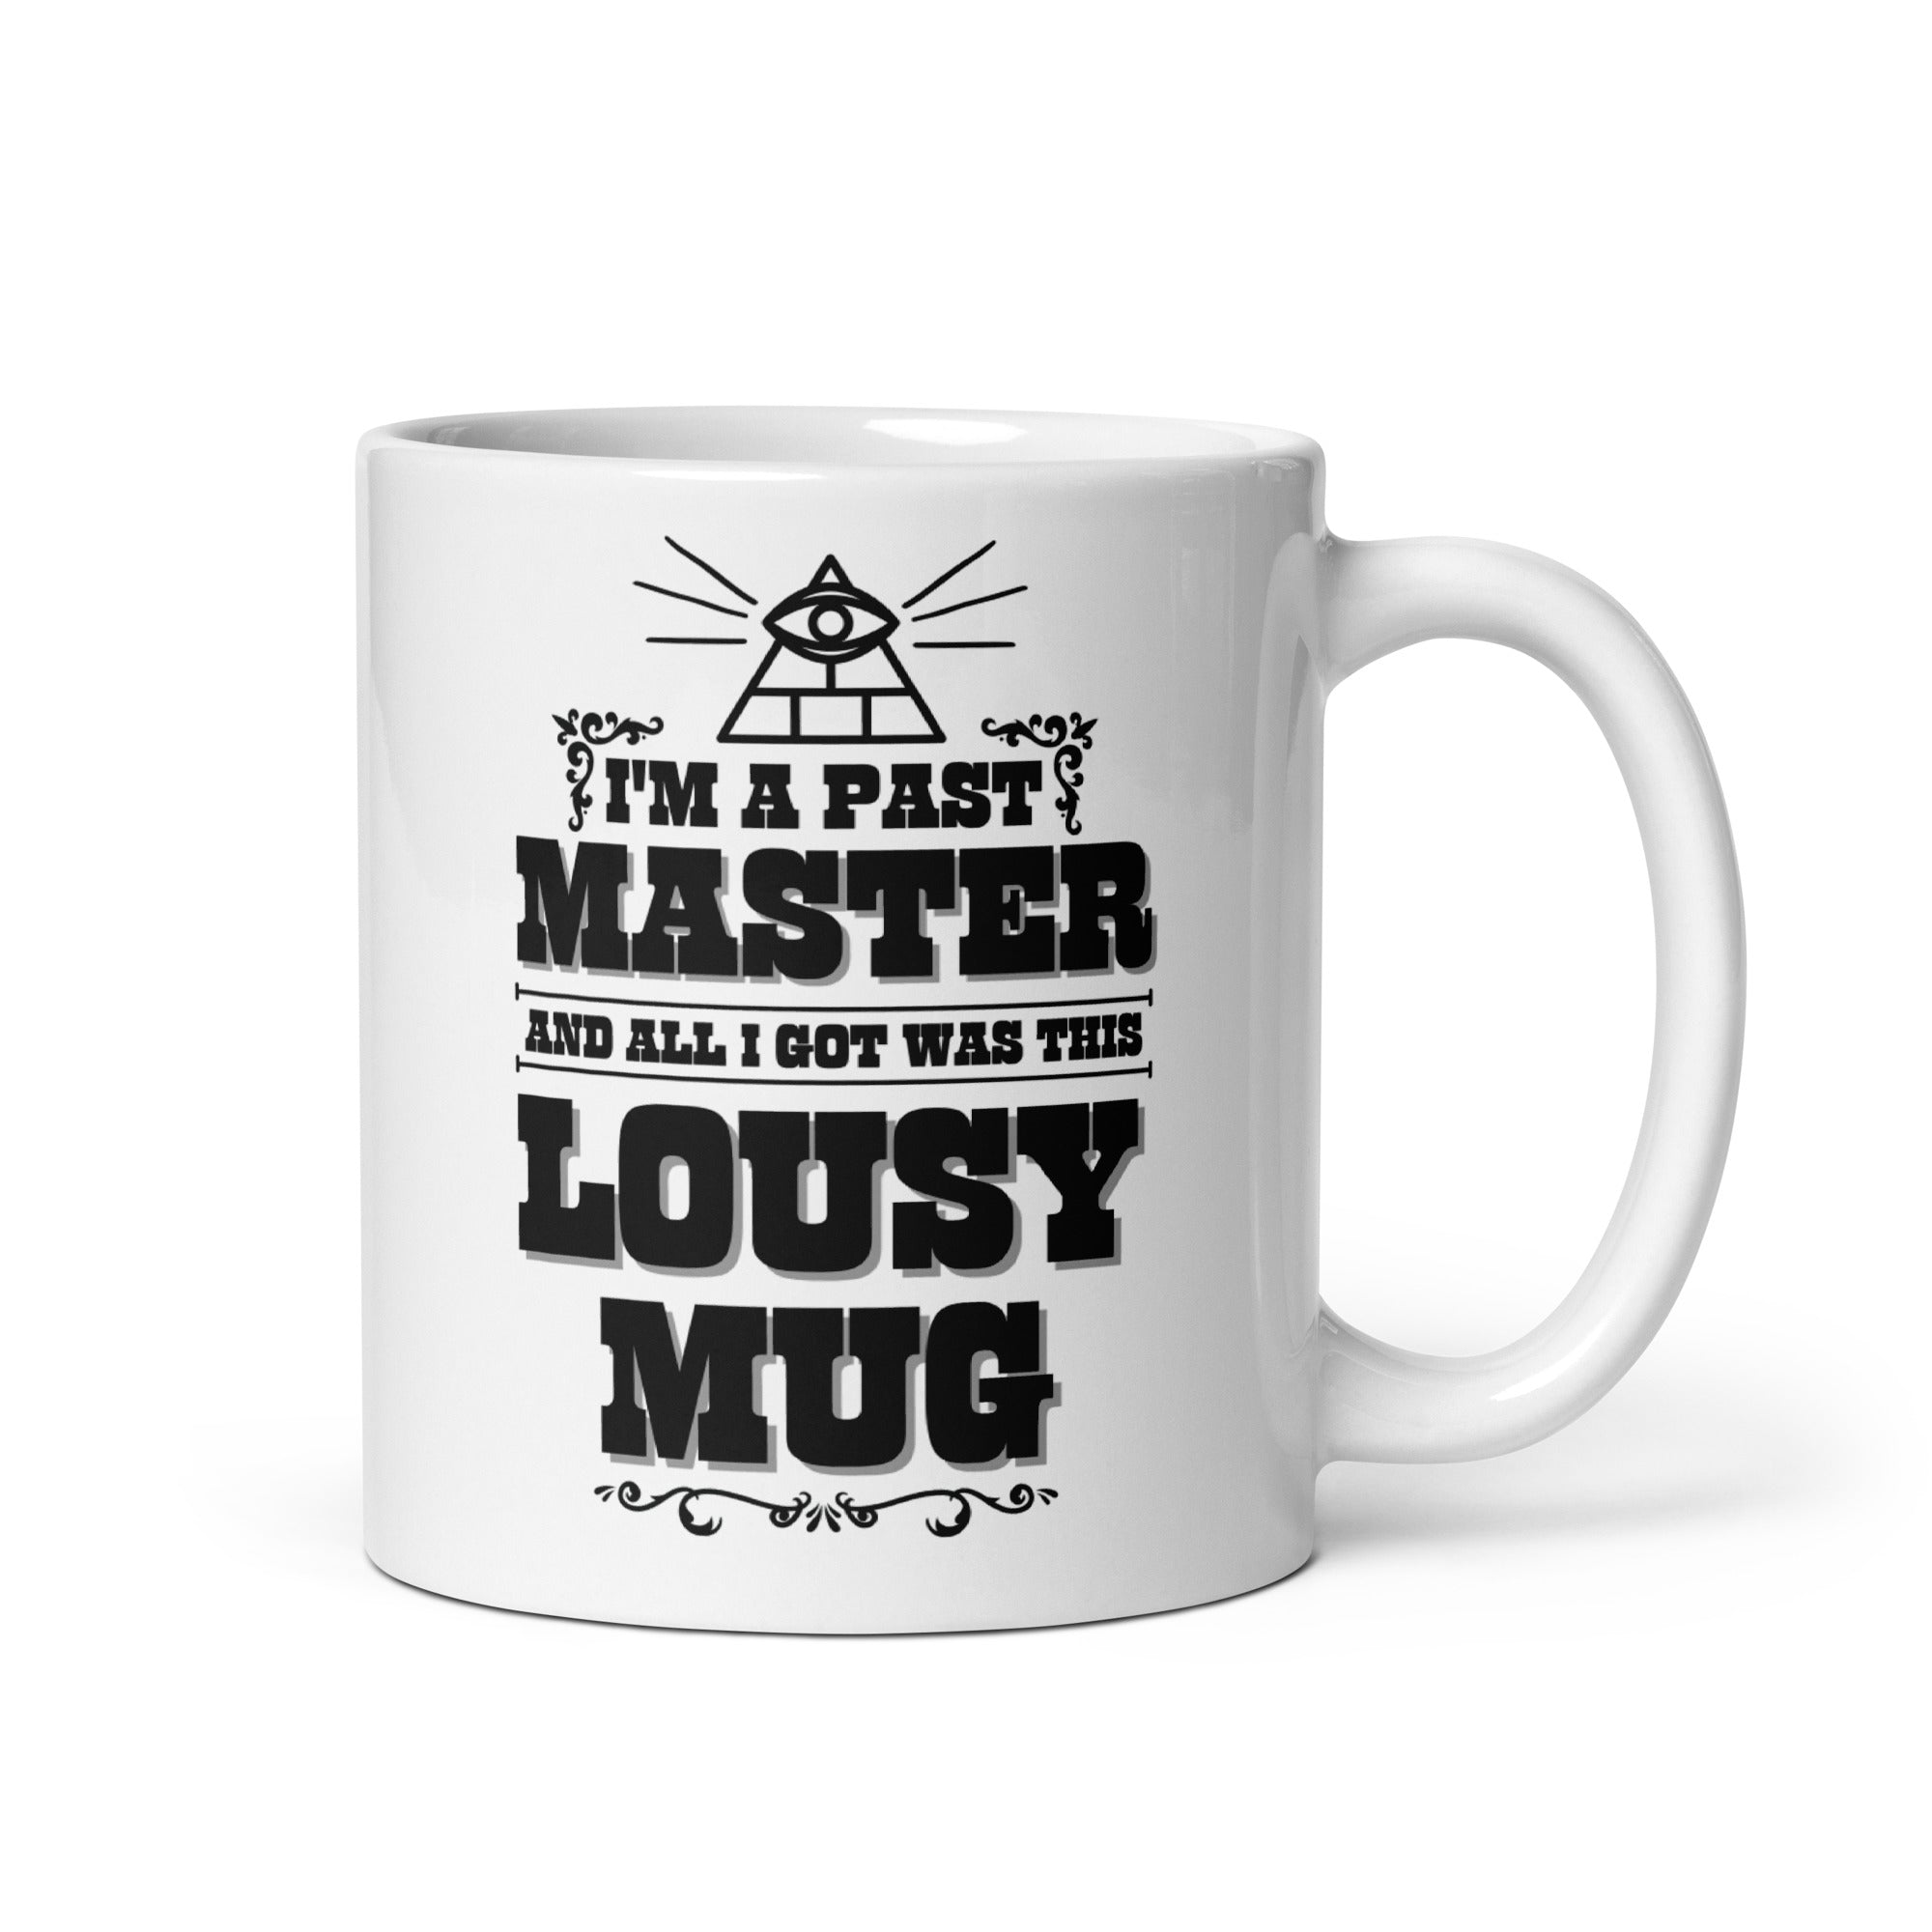 I'm a Past Master mug